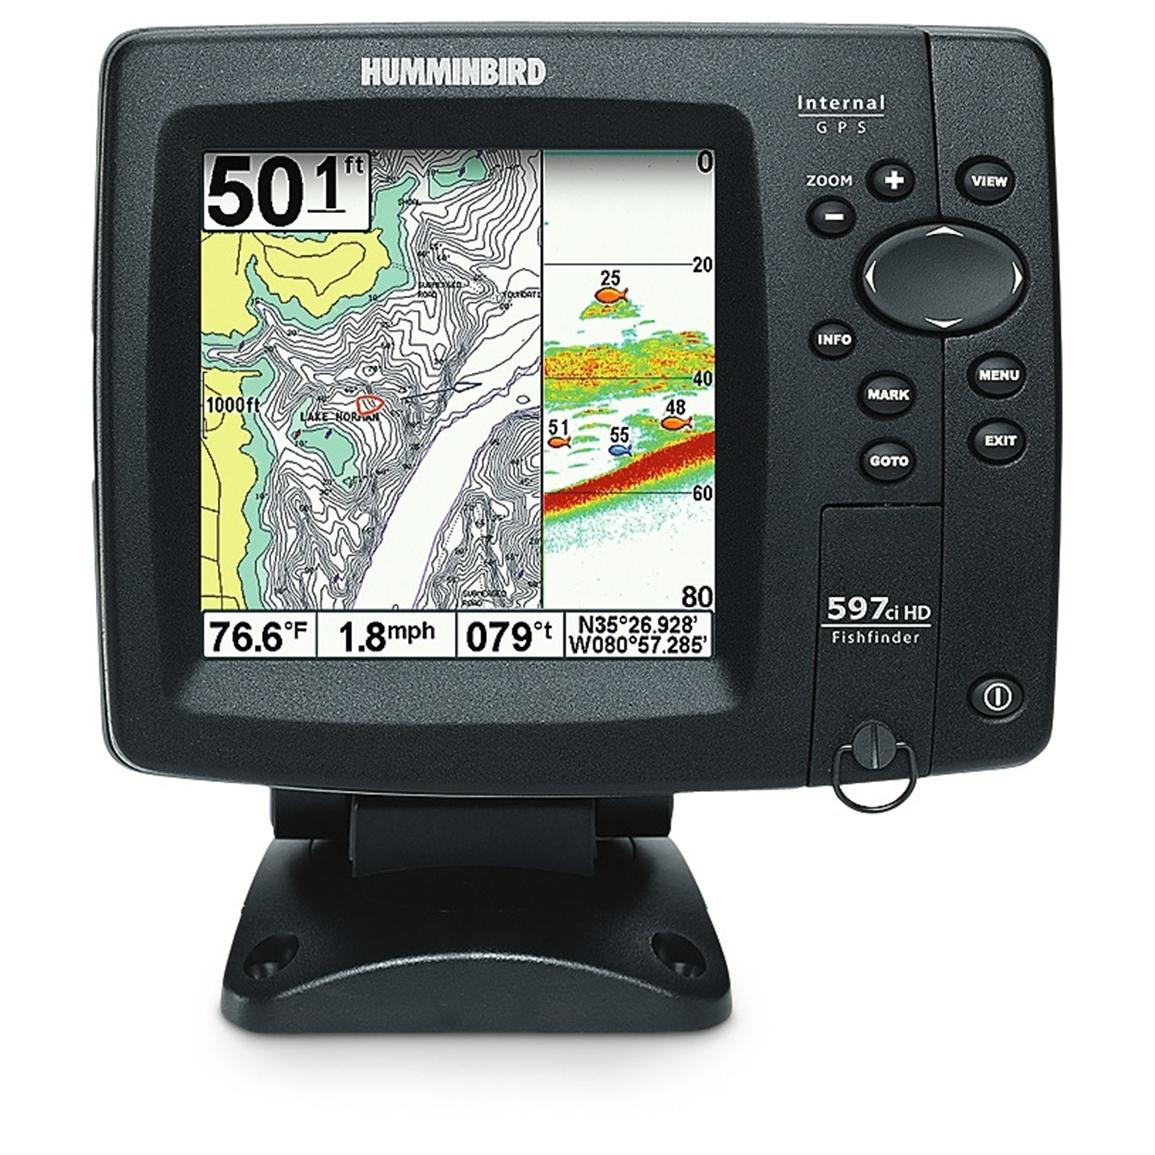 humminbird-597ci-hd-fishfinder-gps-combo-162560-gps-combos-at